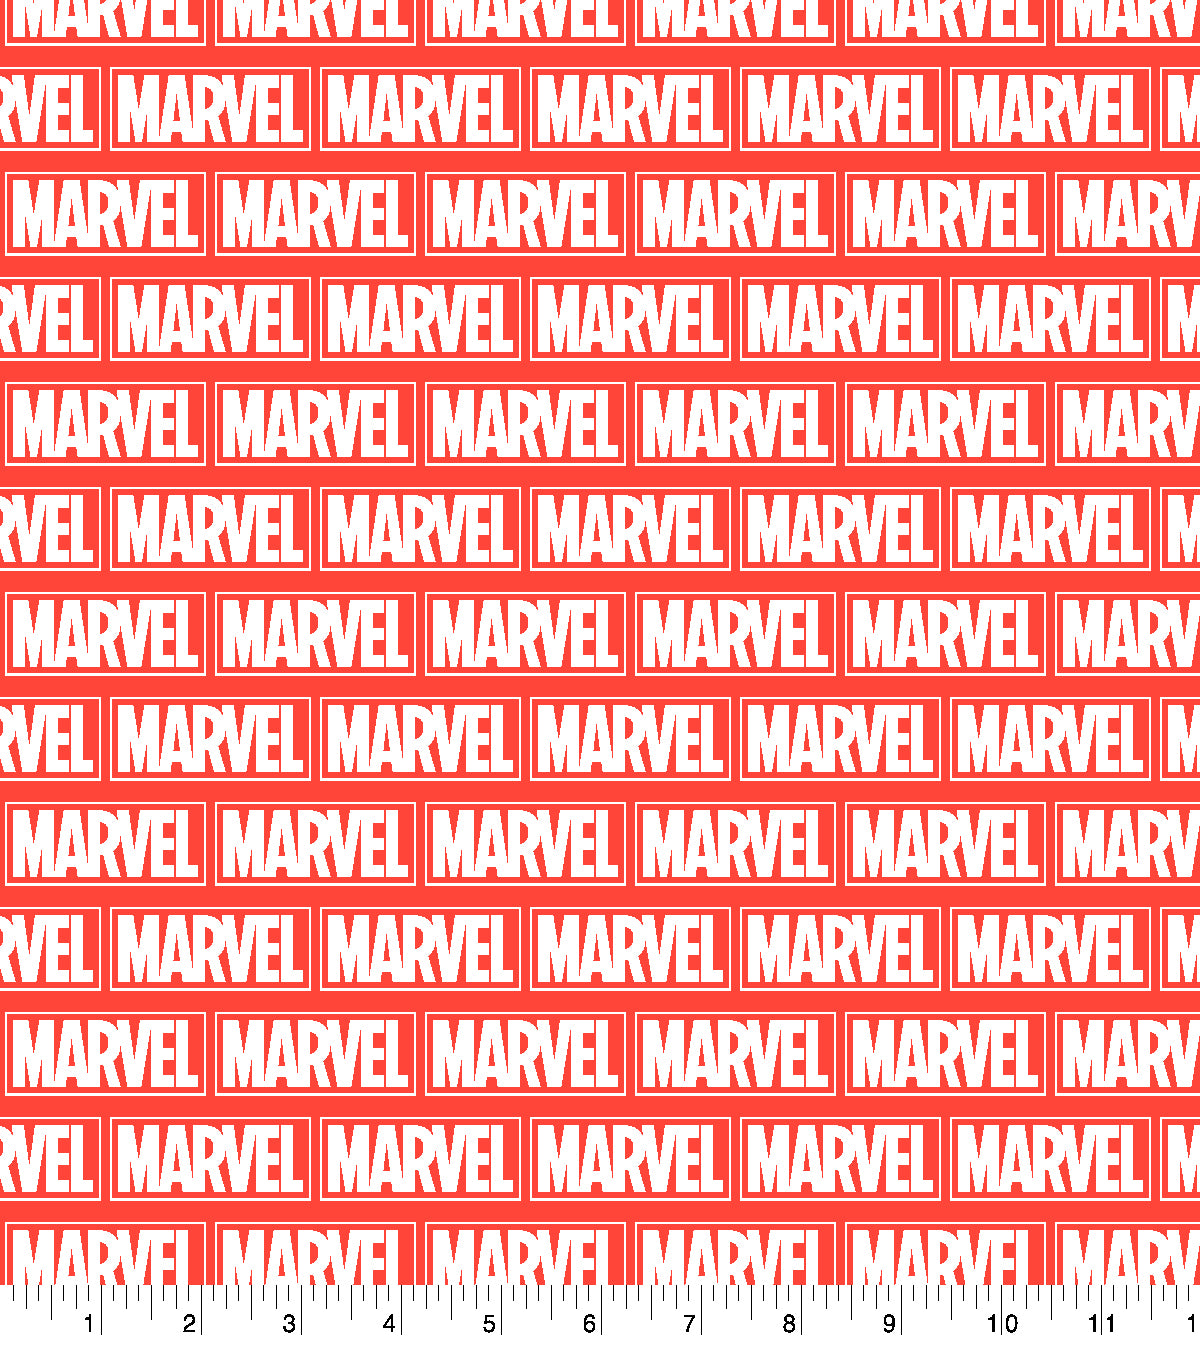 Marvel's Red Brick Logo